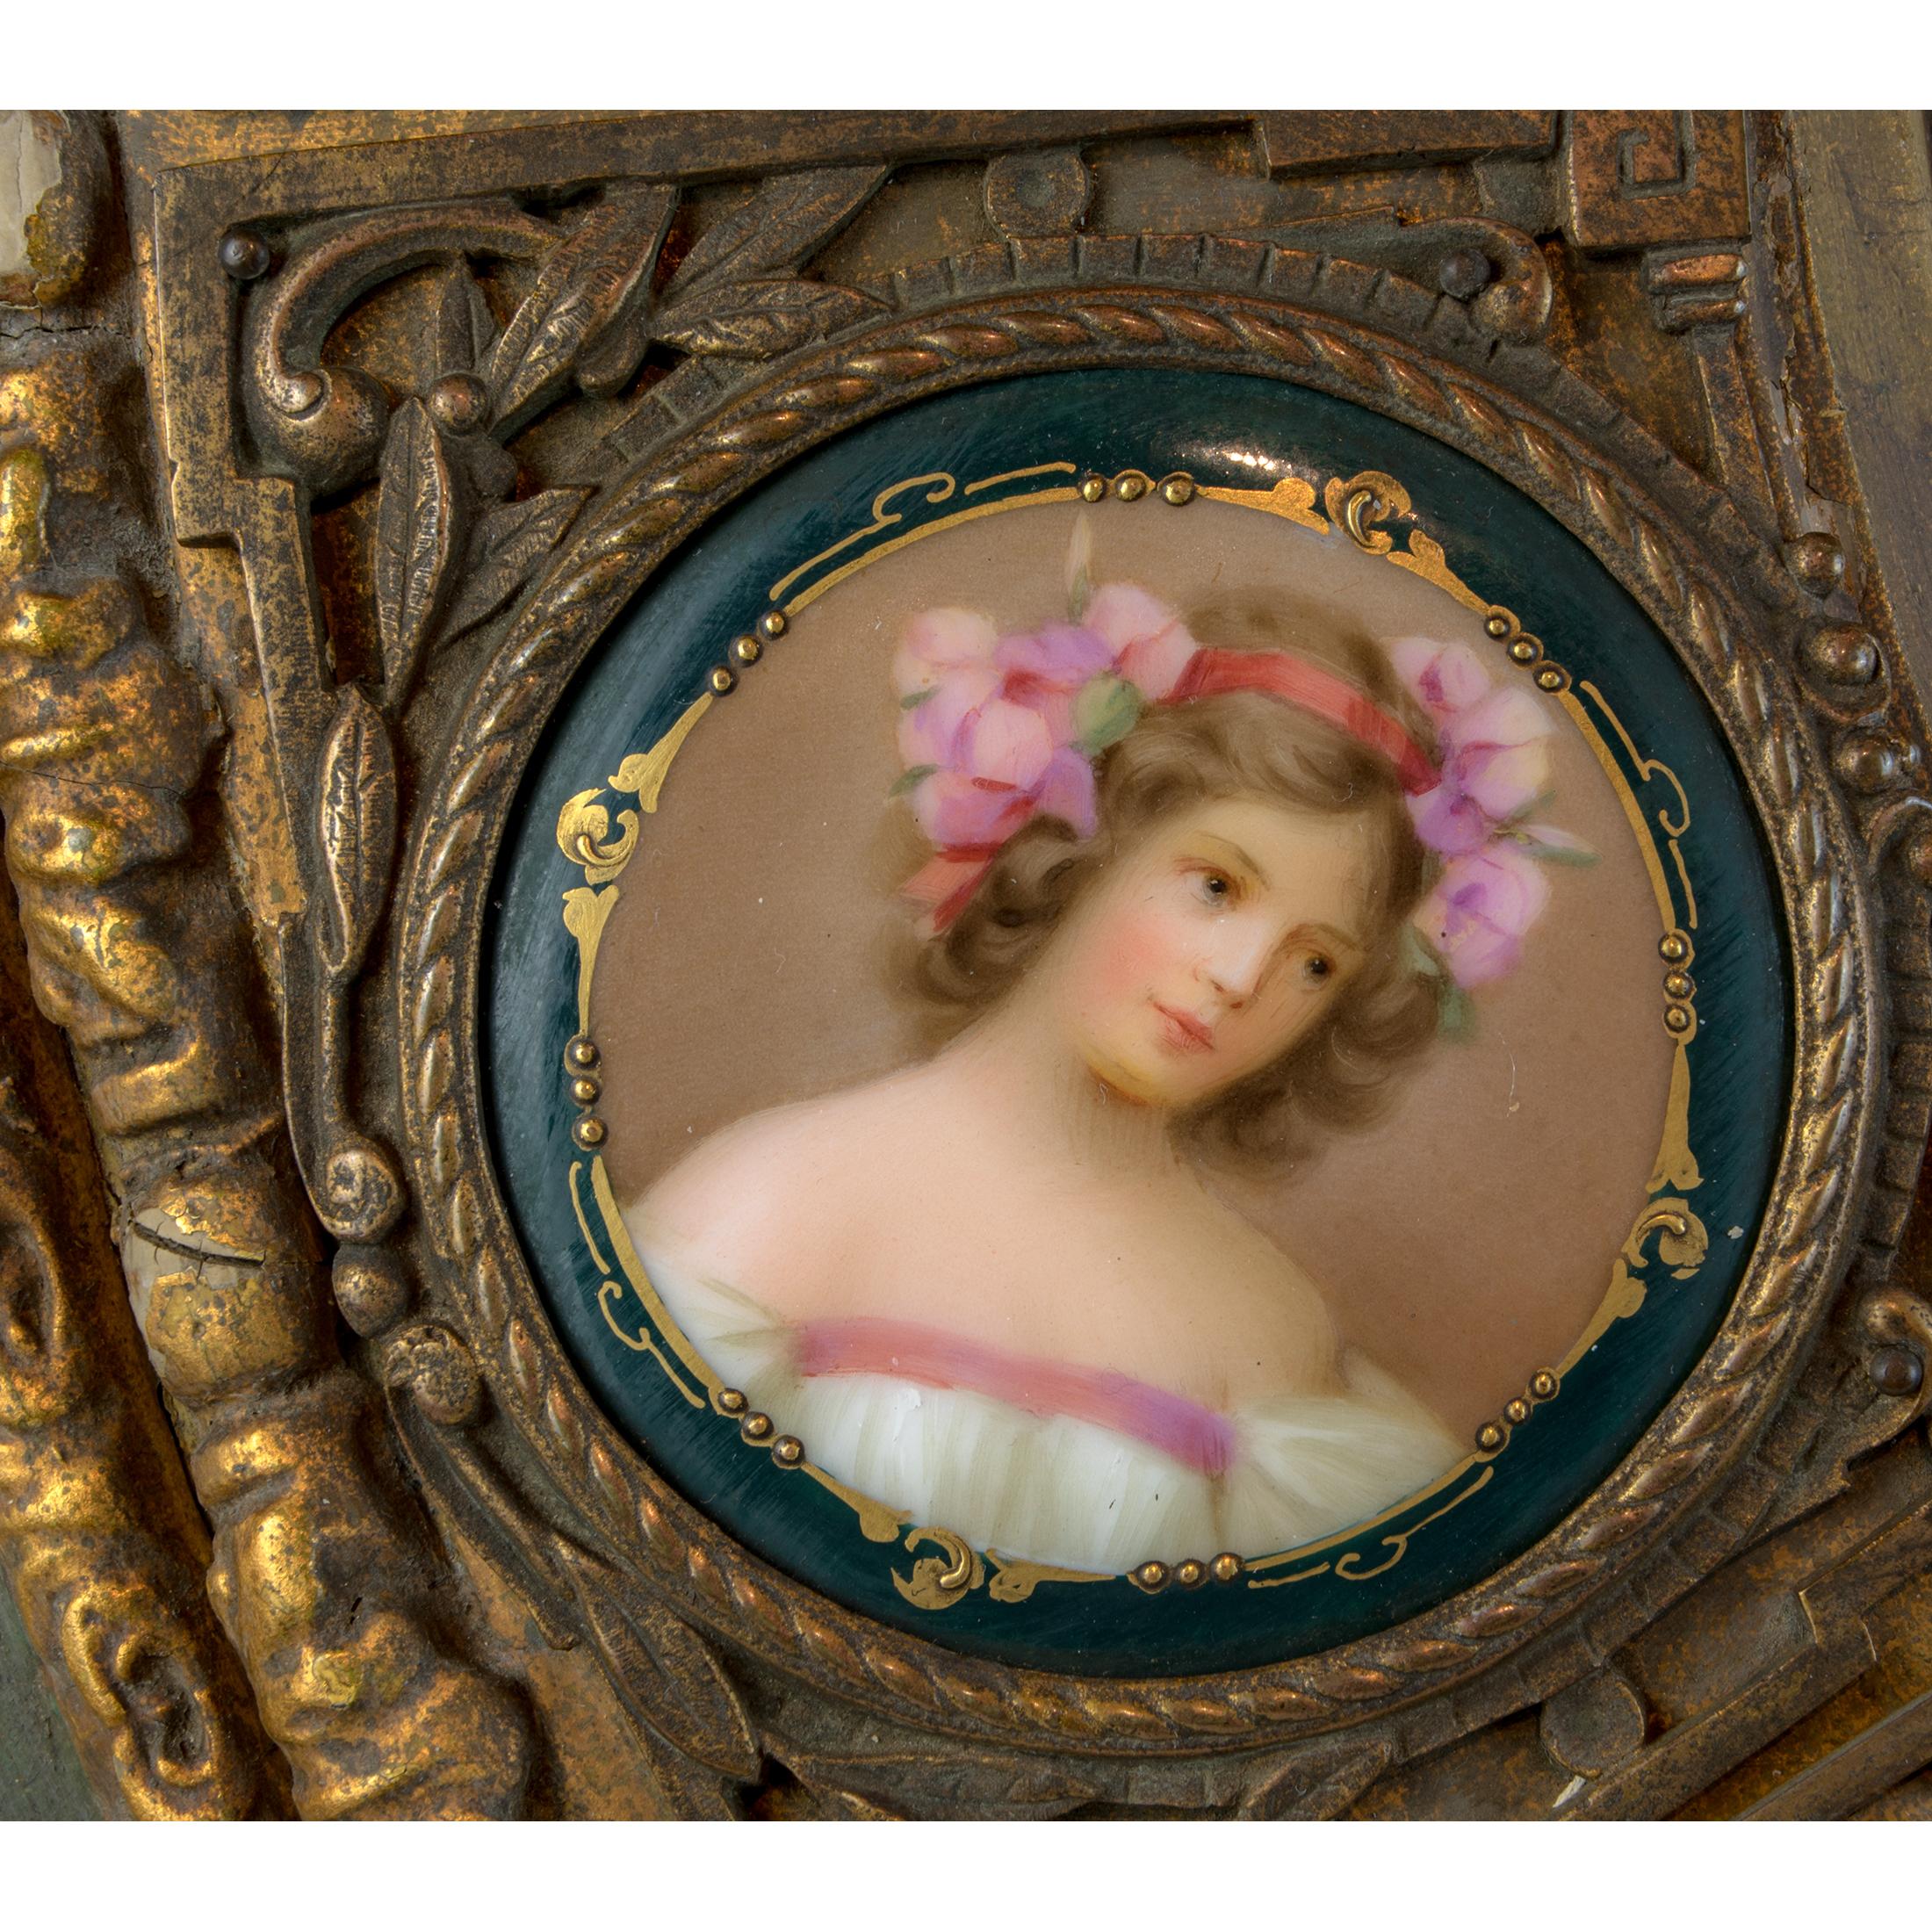 A Majestic Royal Vienna Porcelain Salon Table with Portraits For Sale 2